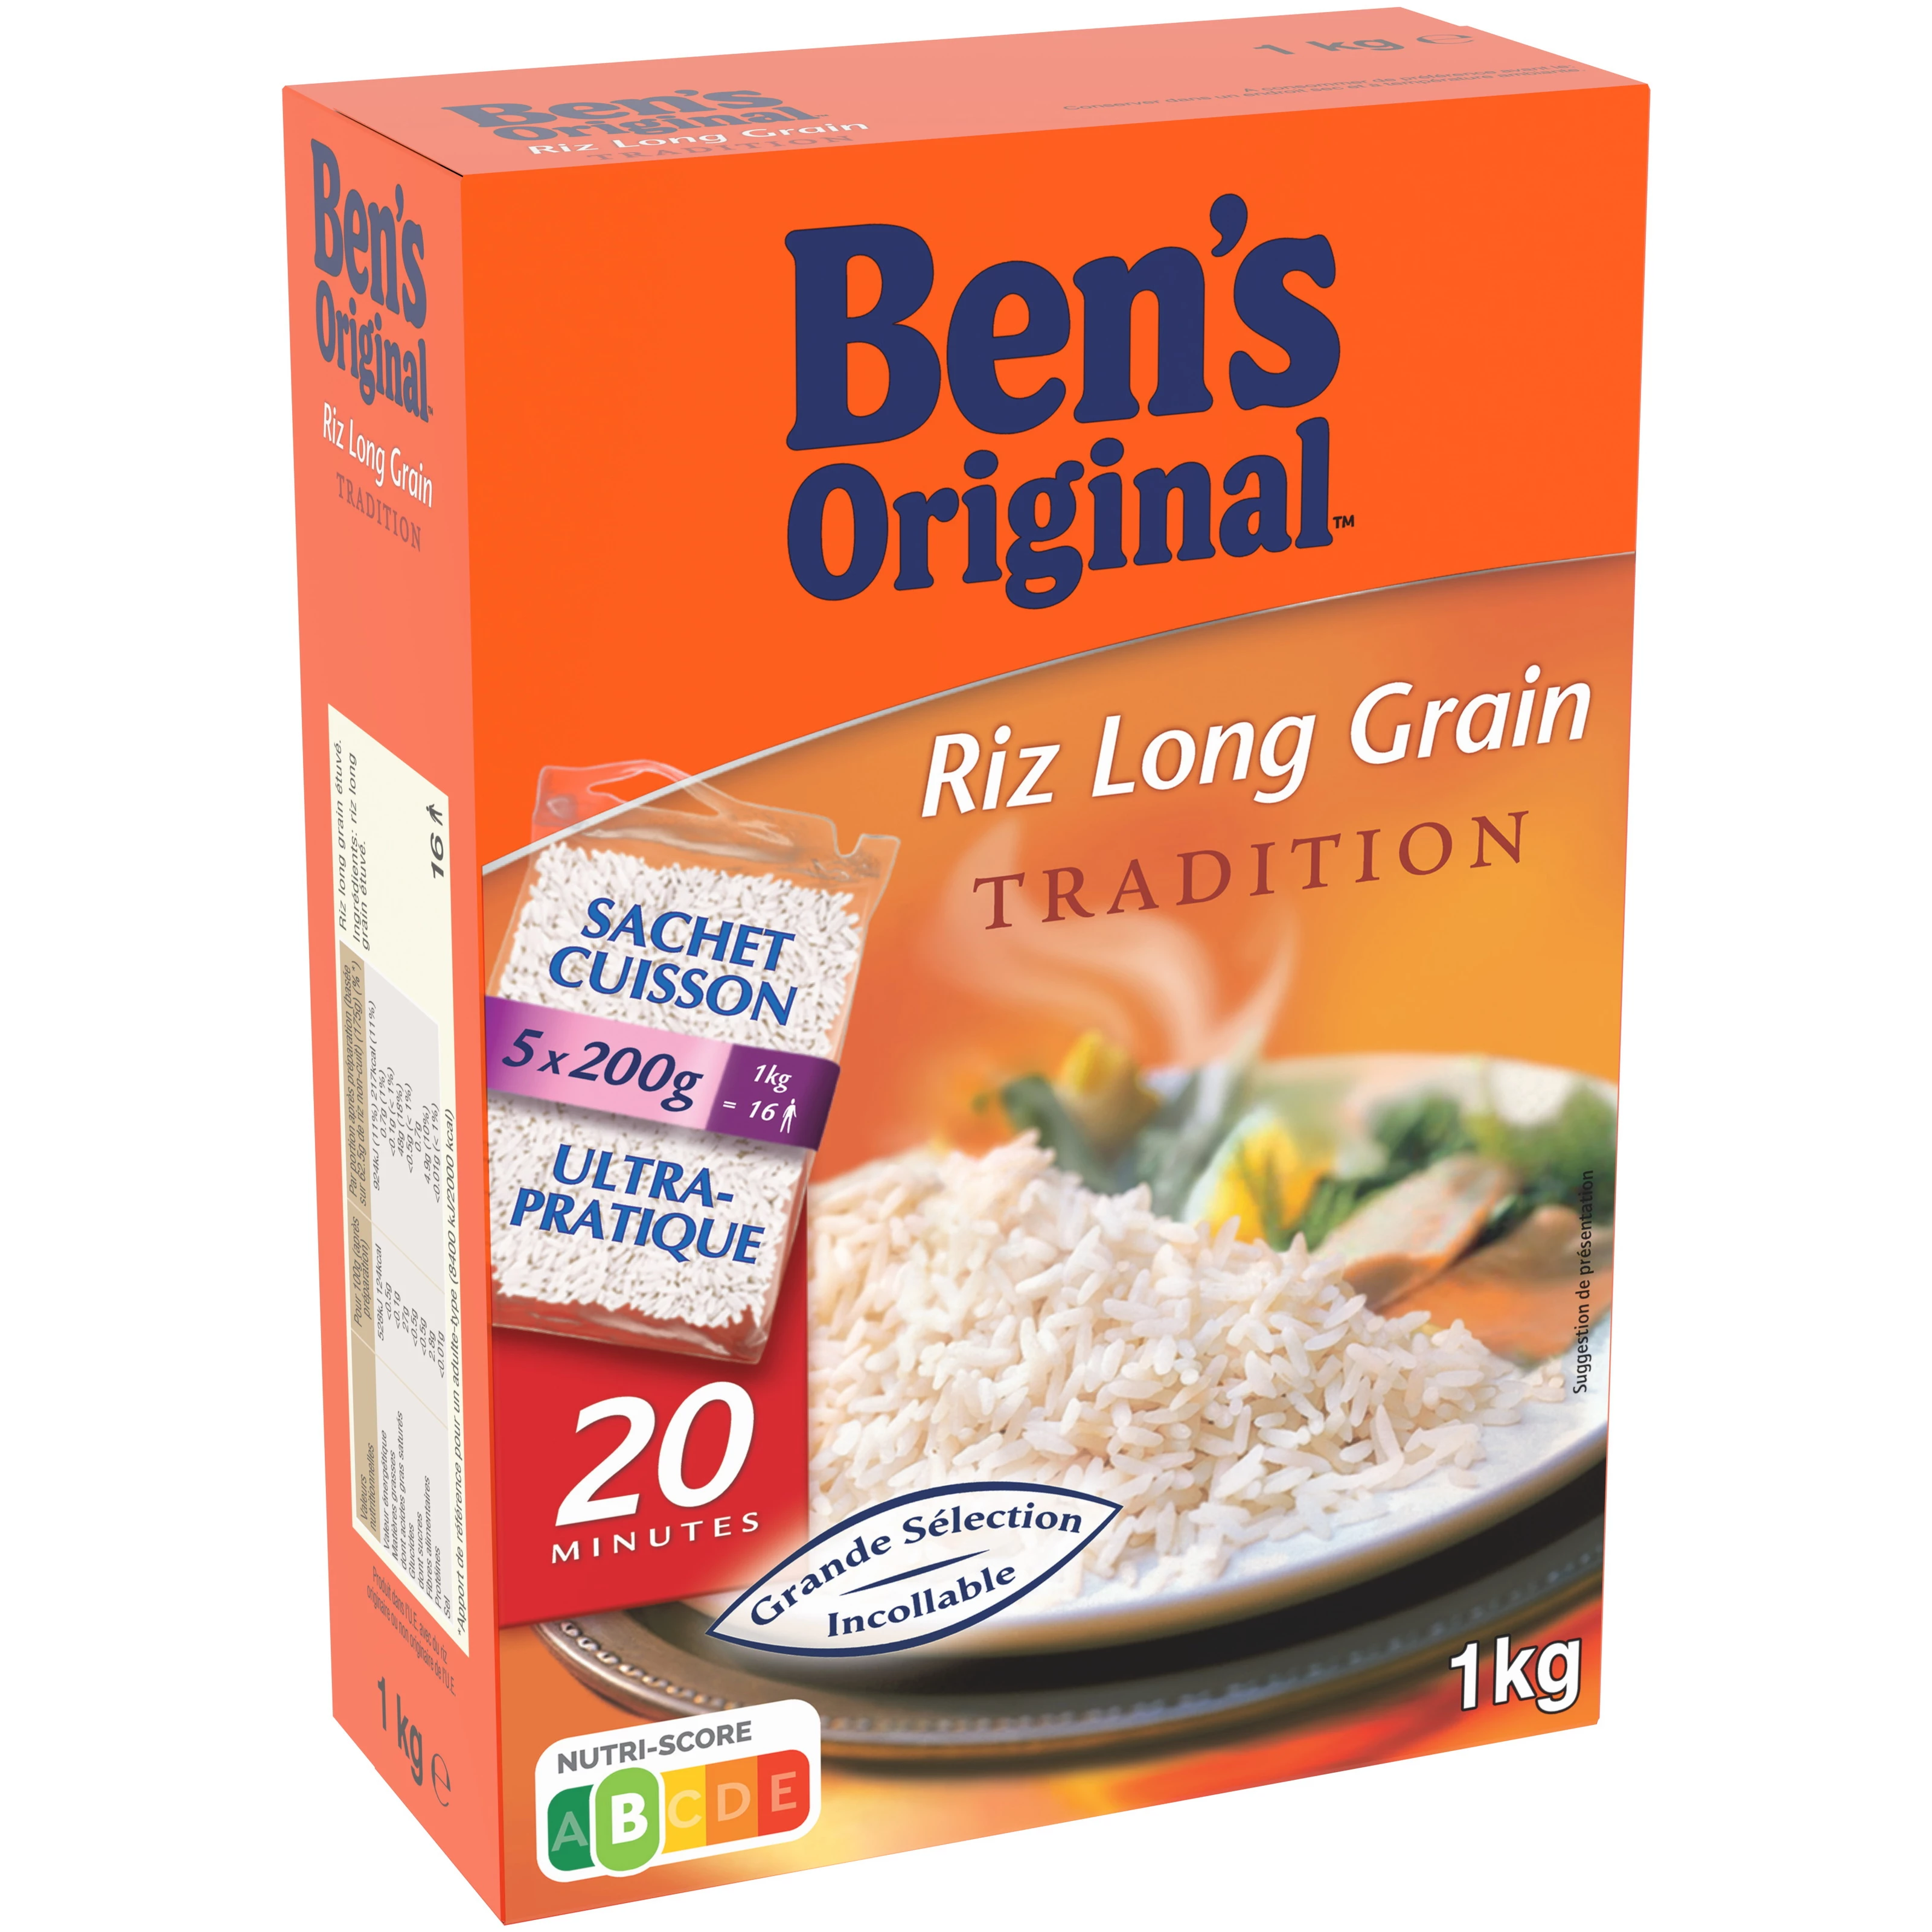 Riz Long Grain Tradition, 1kg - BEN'S Original